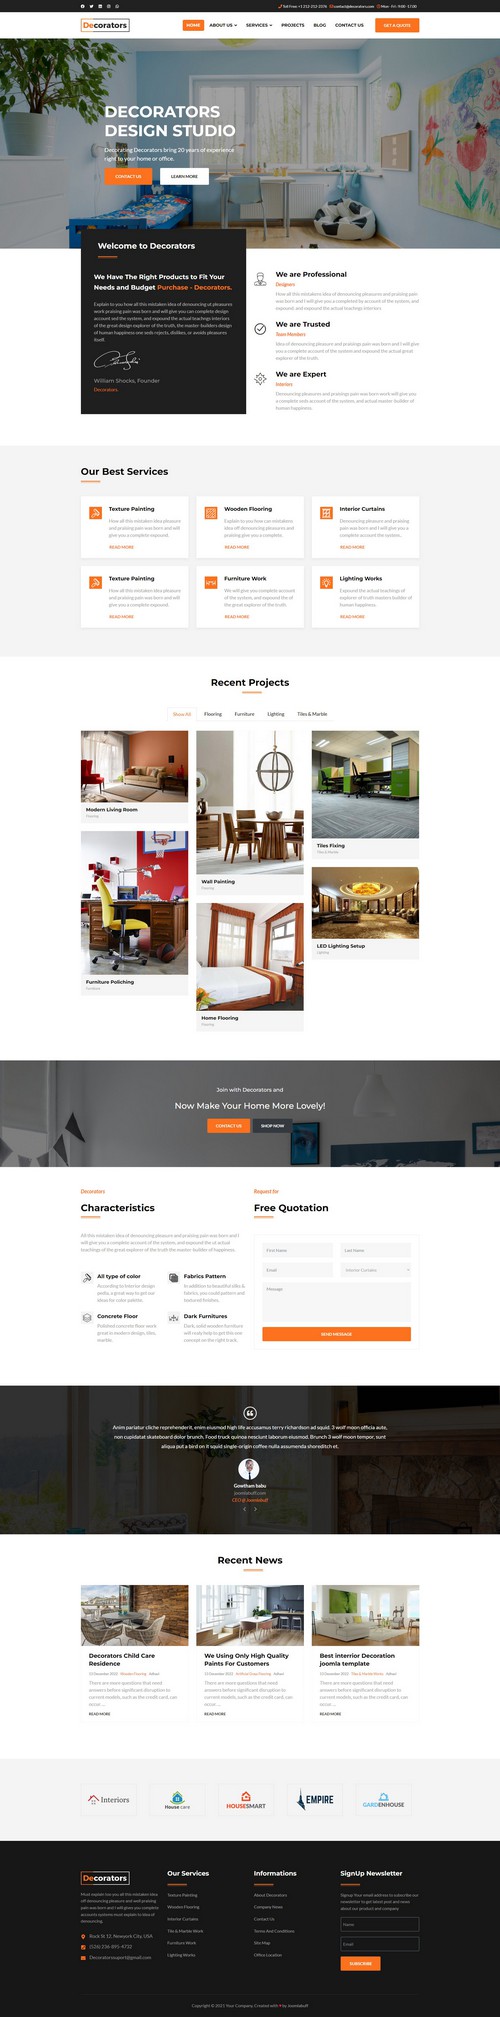 Decorators - Architecture & Modern Interior Design Studio Joomla Template